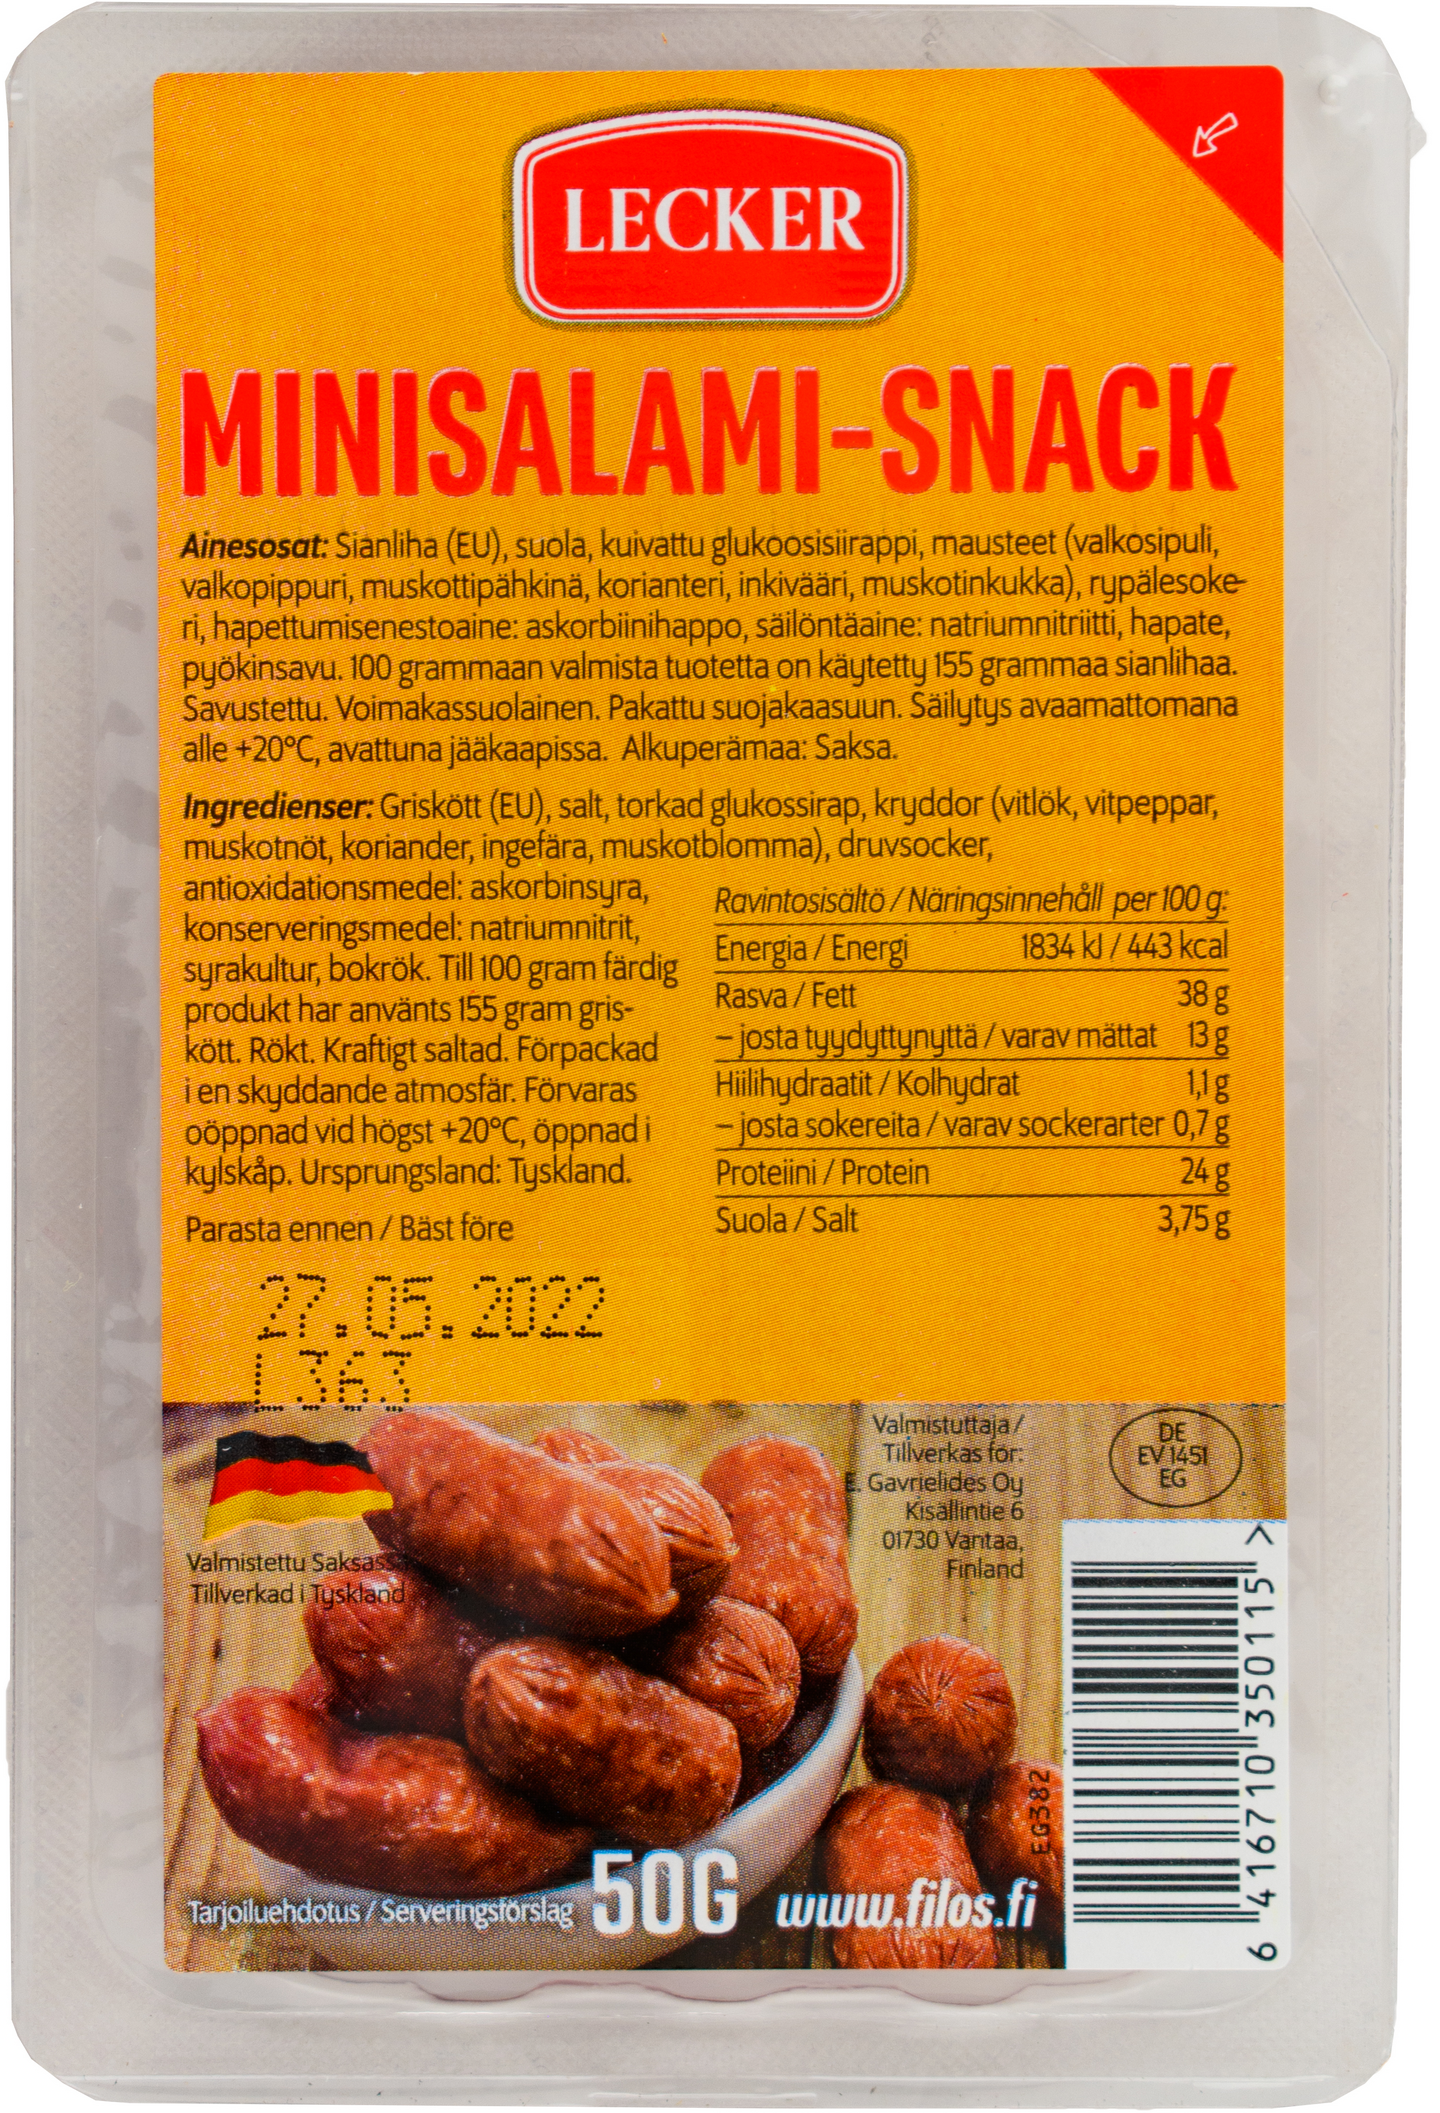 Lecker minisalami-snack 50g